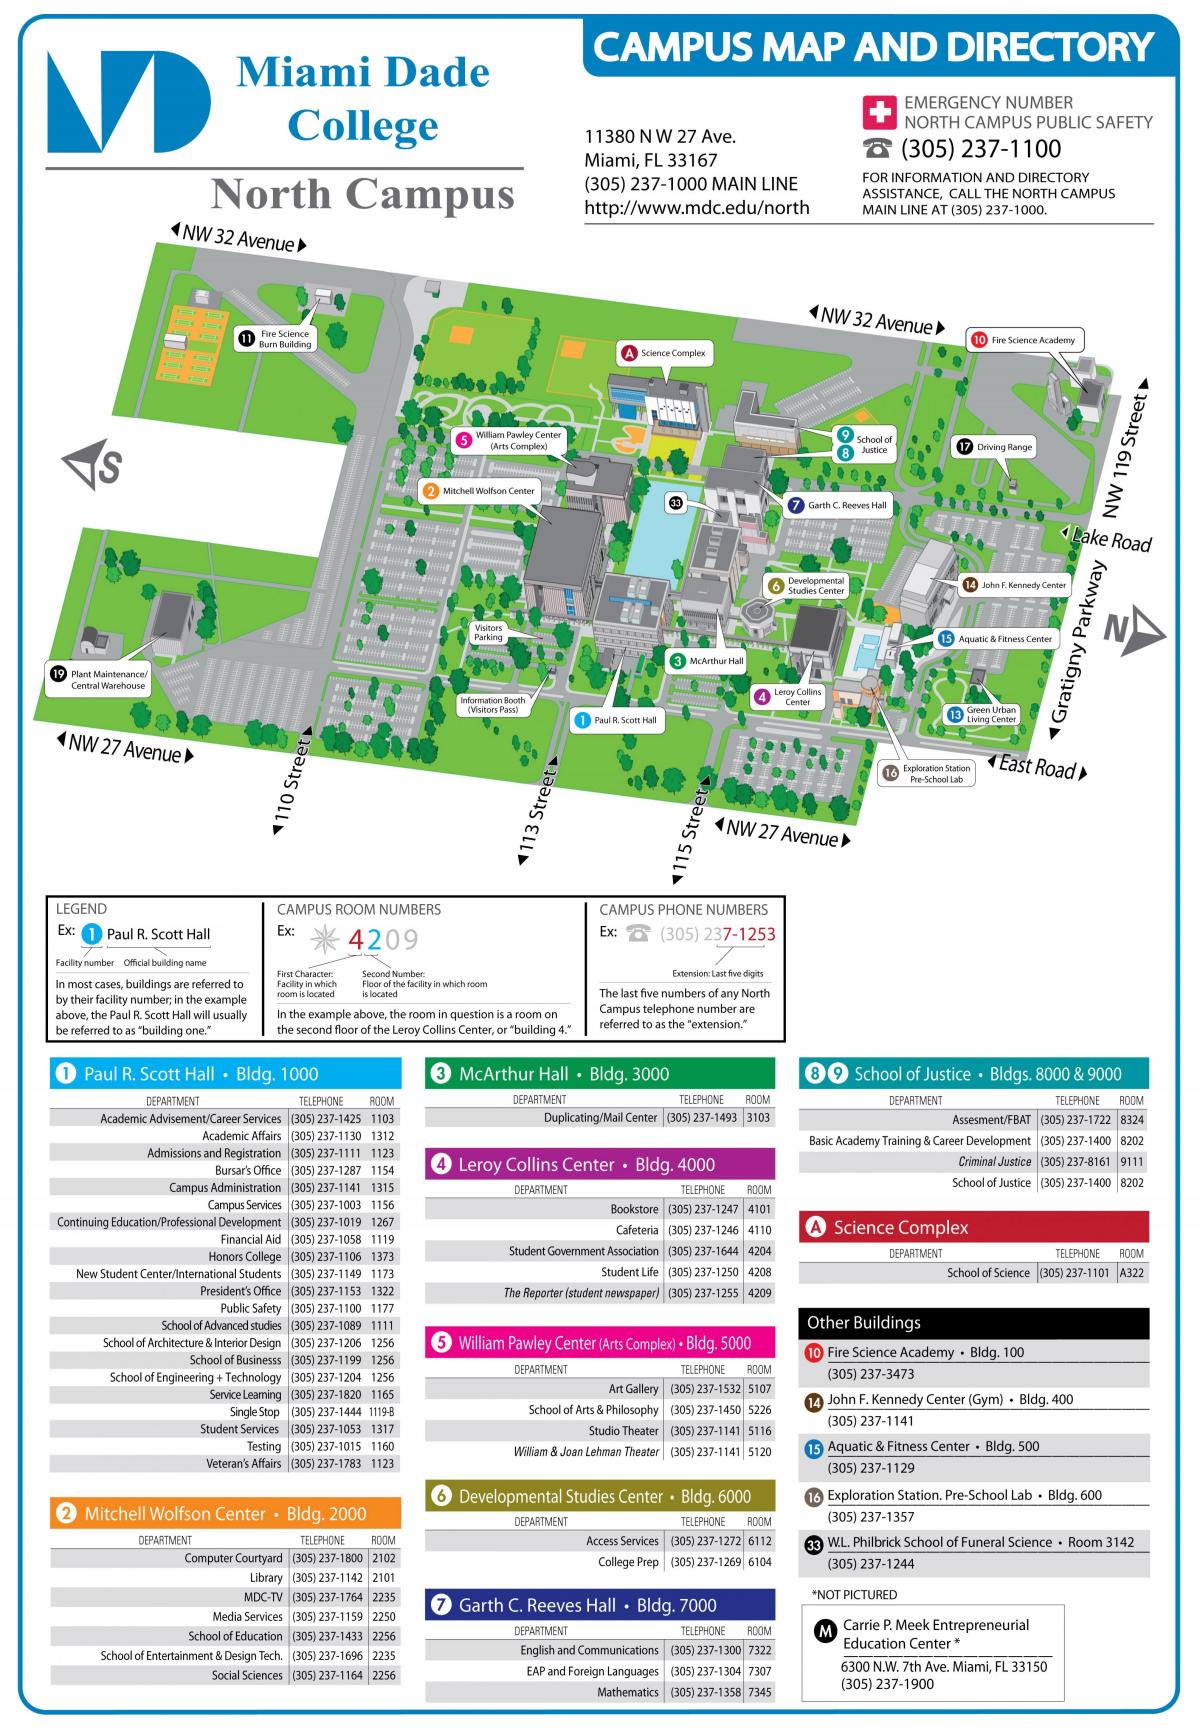 Miami Dade college norte-mapa do campus.